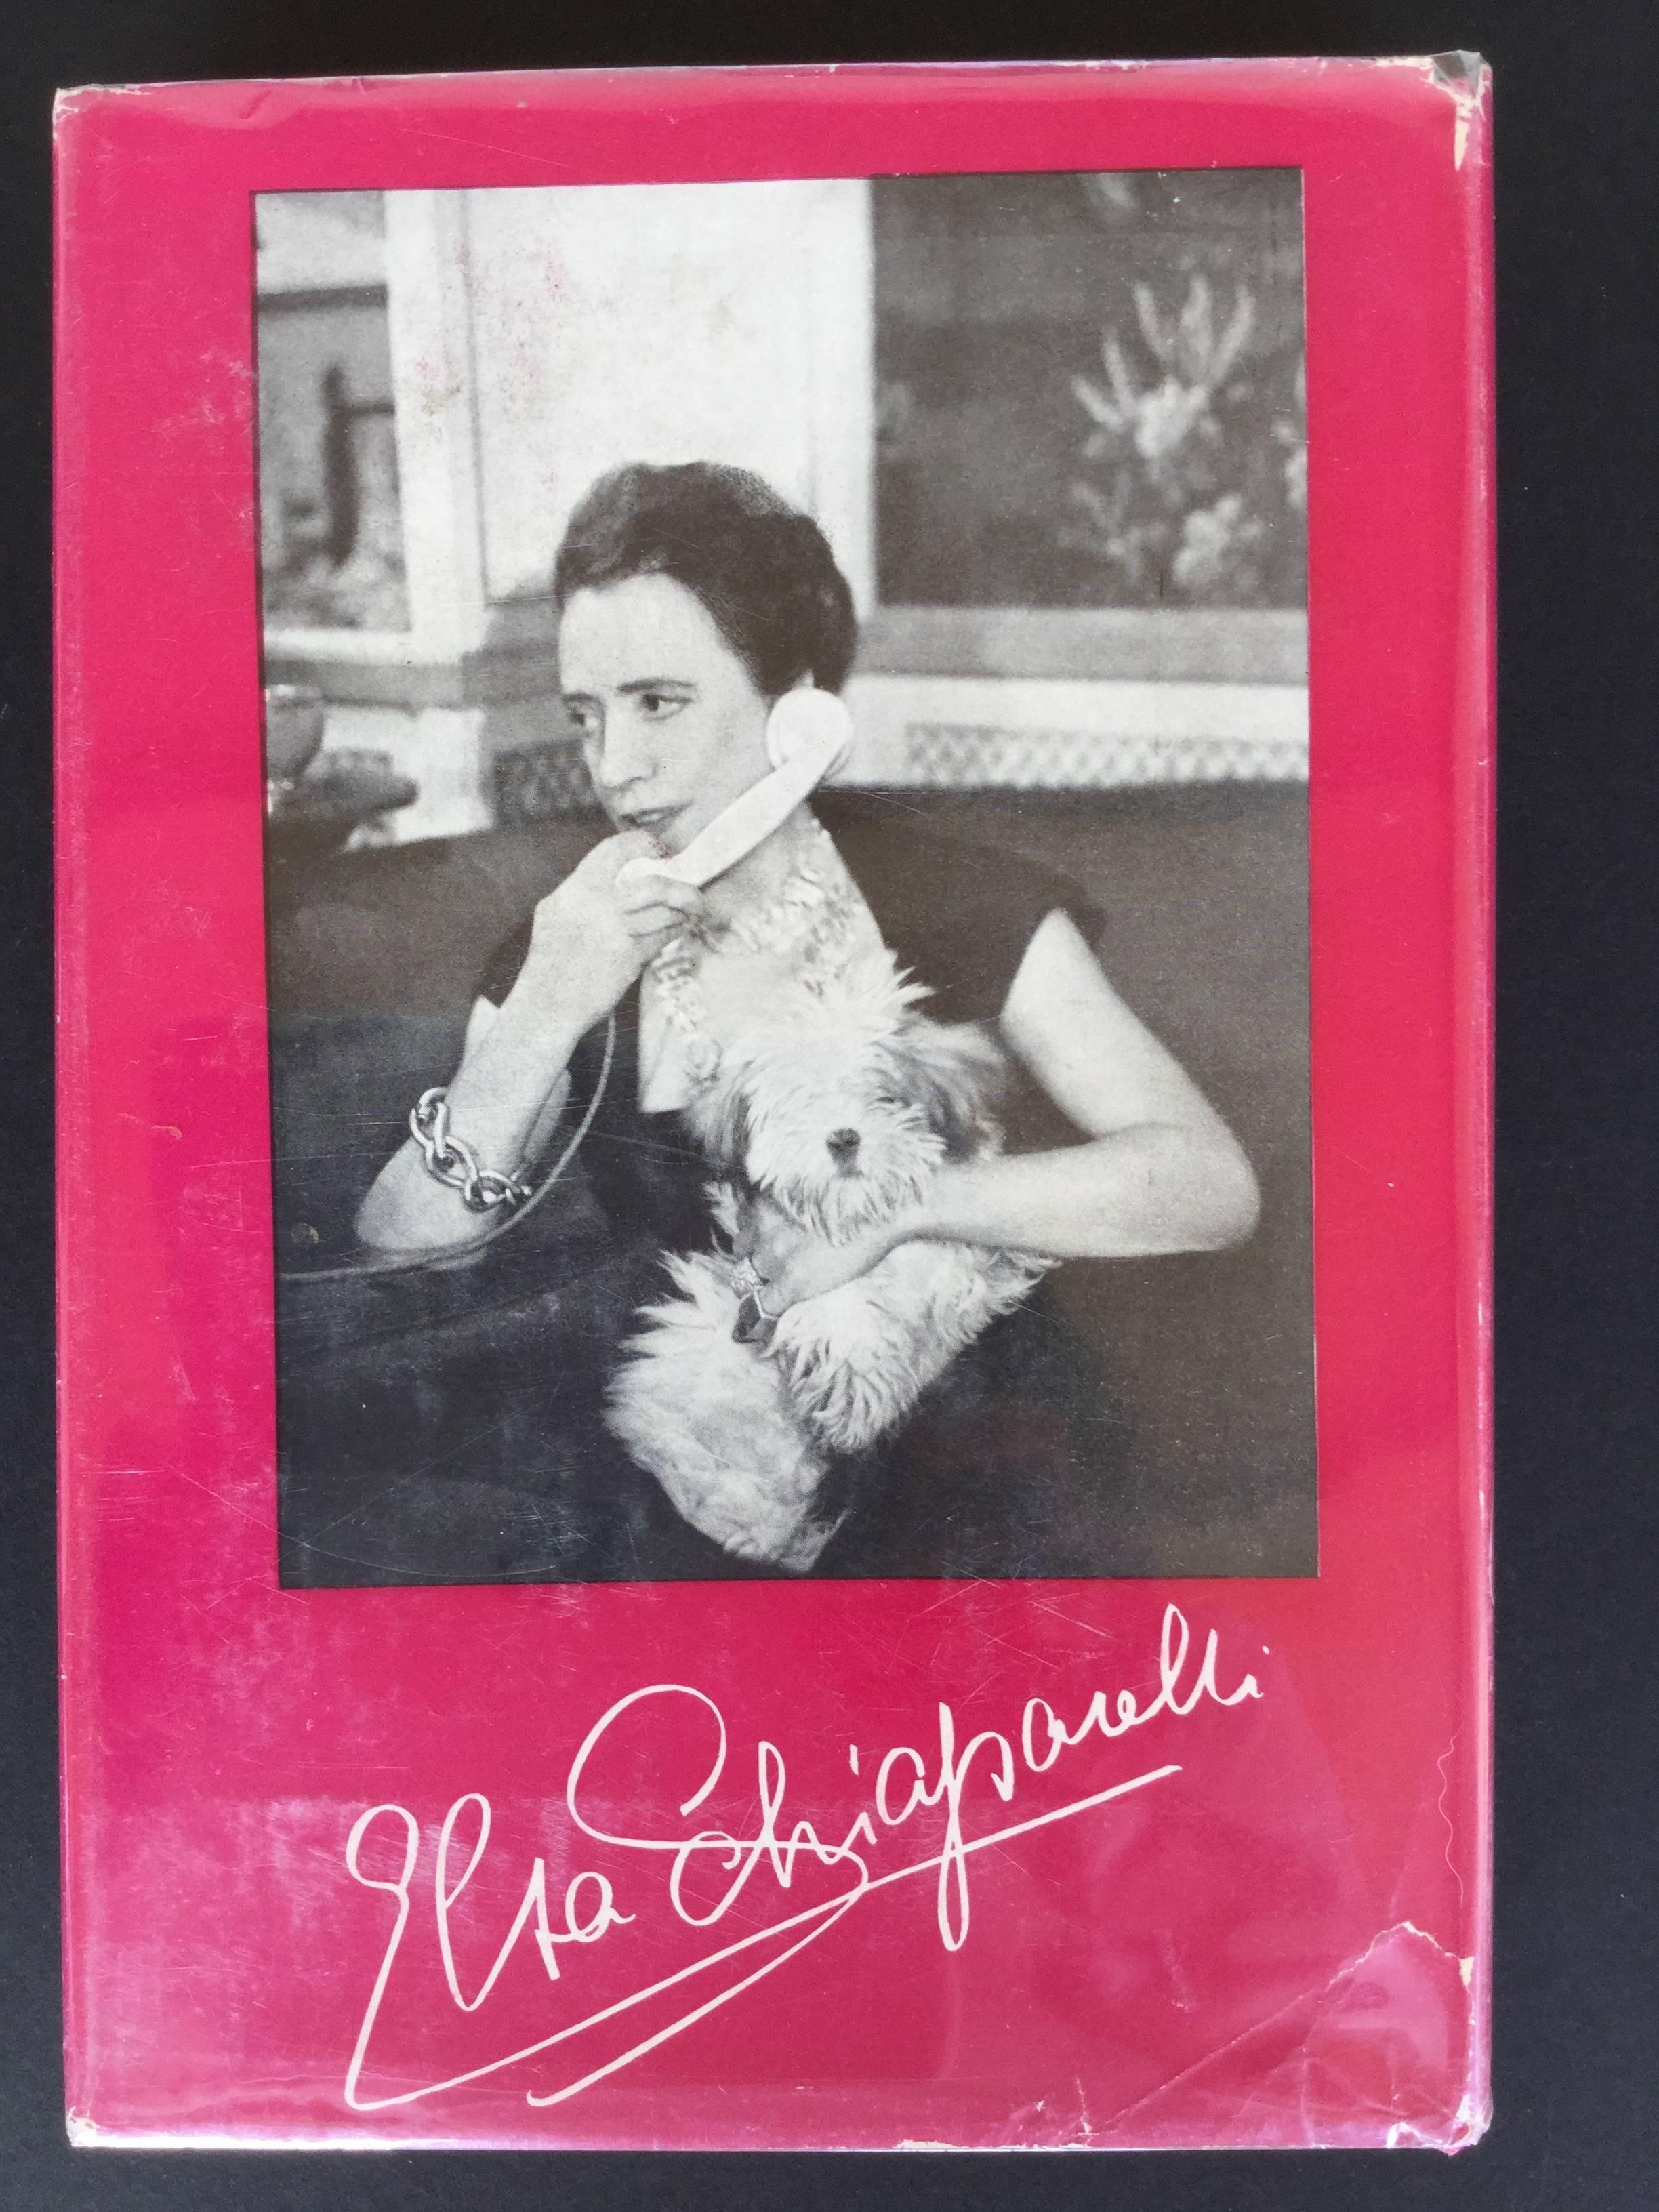 Shocking Life. The autobiography of Elsa Schaiparelli. 1st Edition. 1954 5